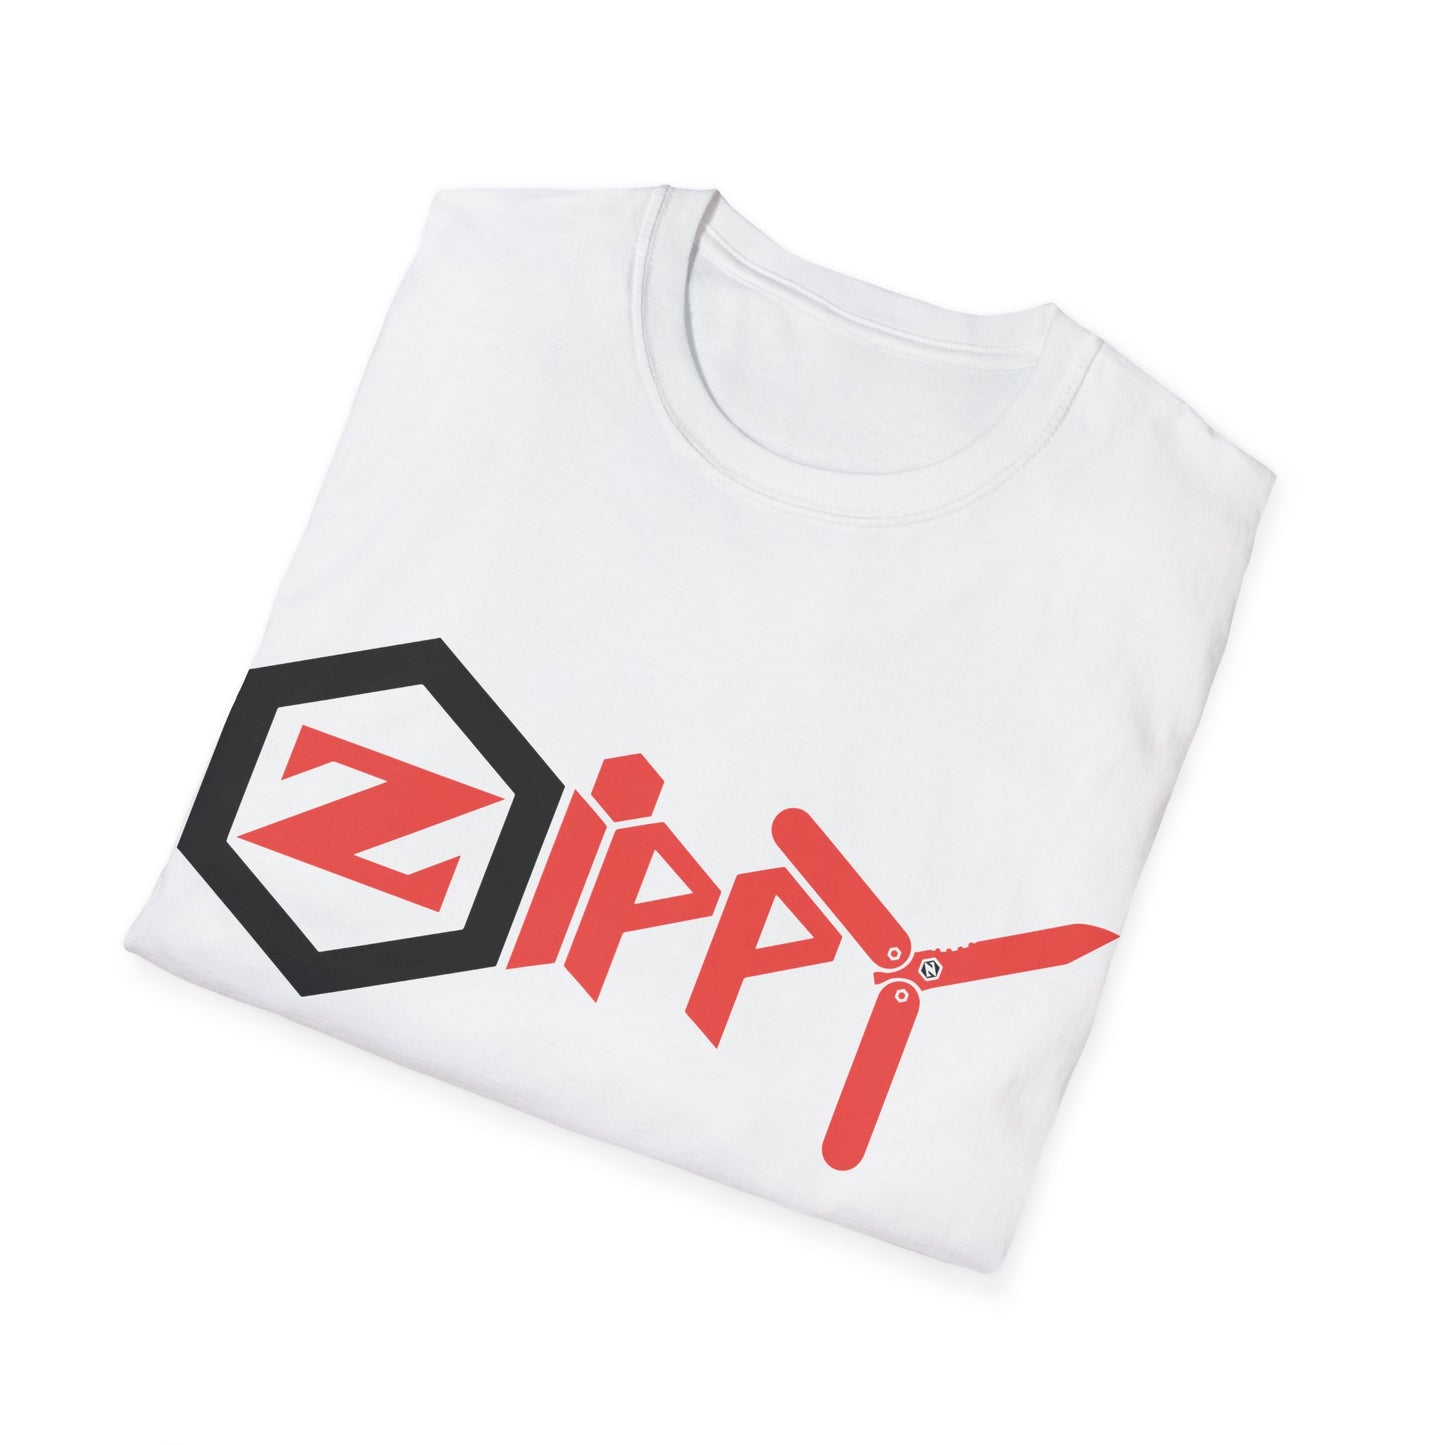 Men's Zippy T-Shirt [Black Hexagon]